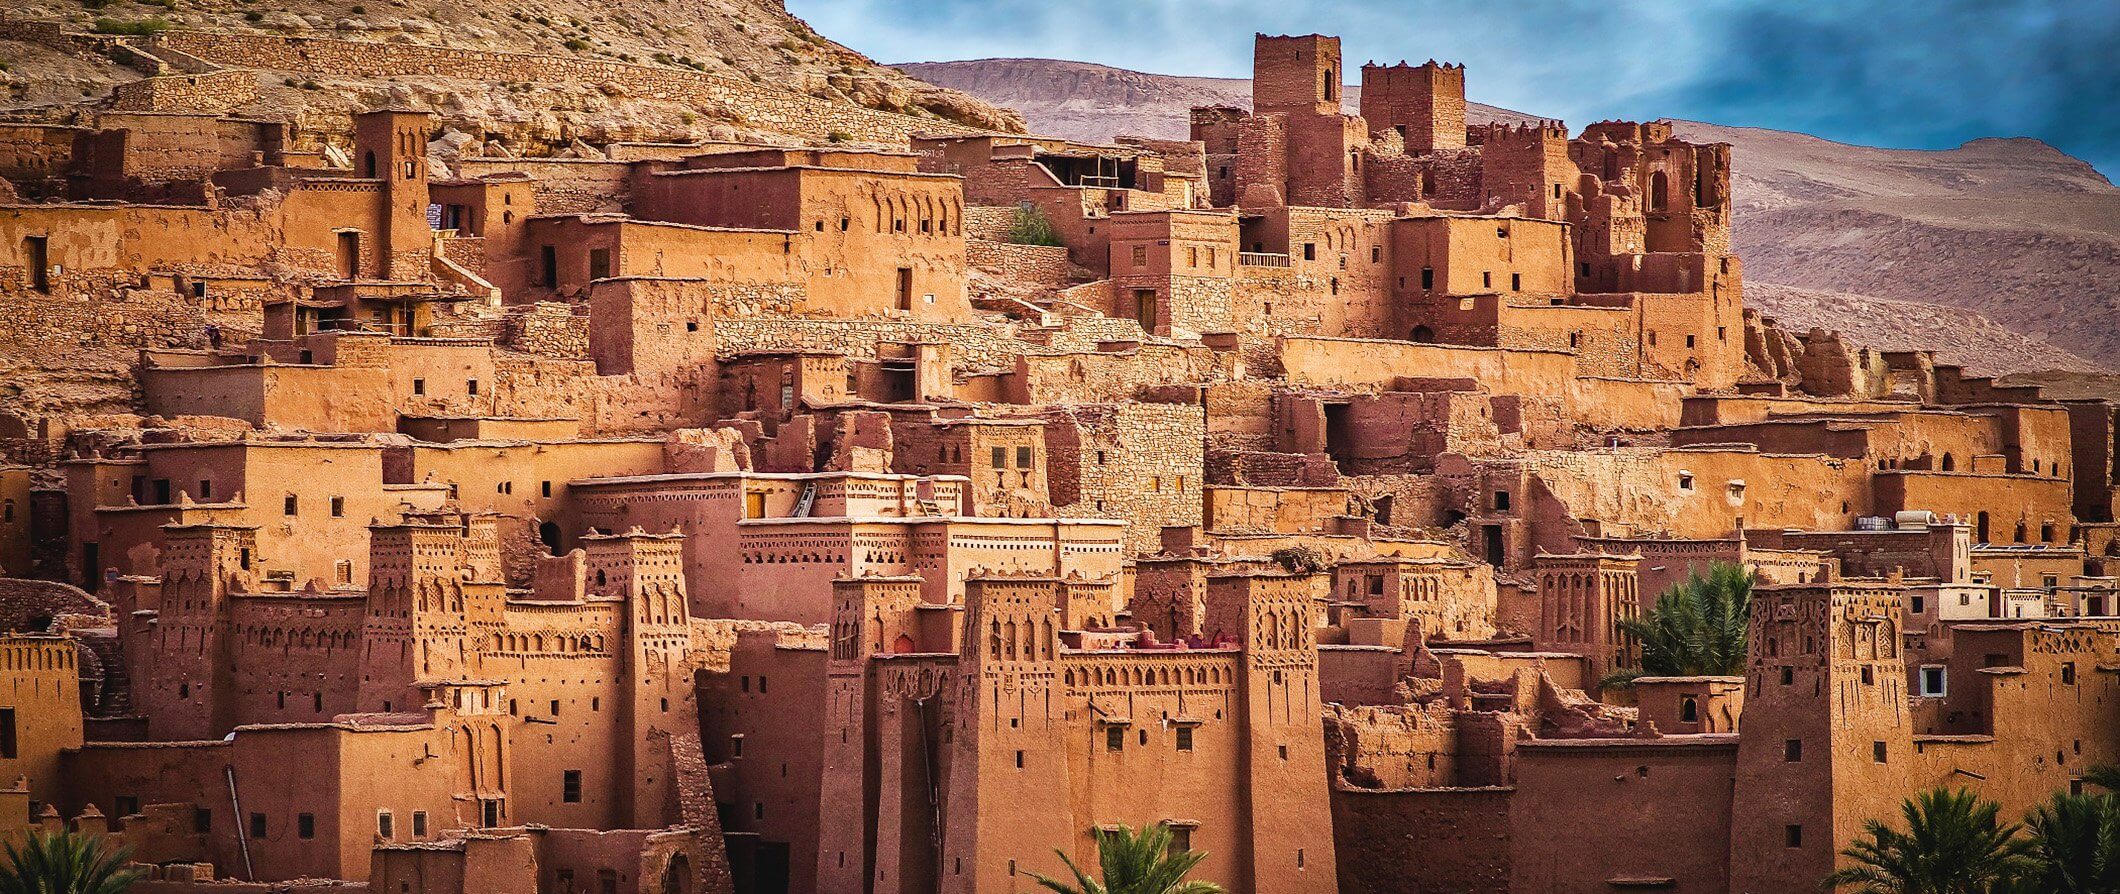 morocco travel now